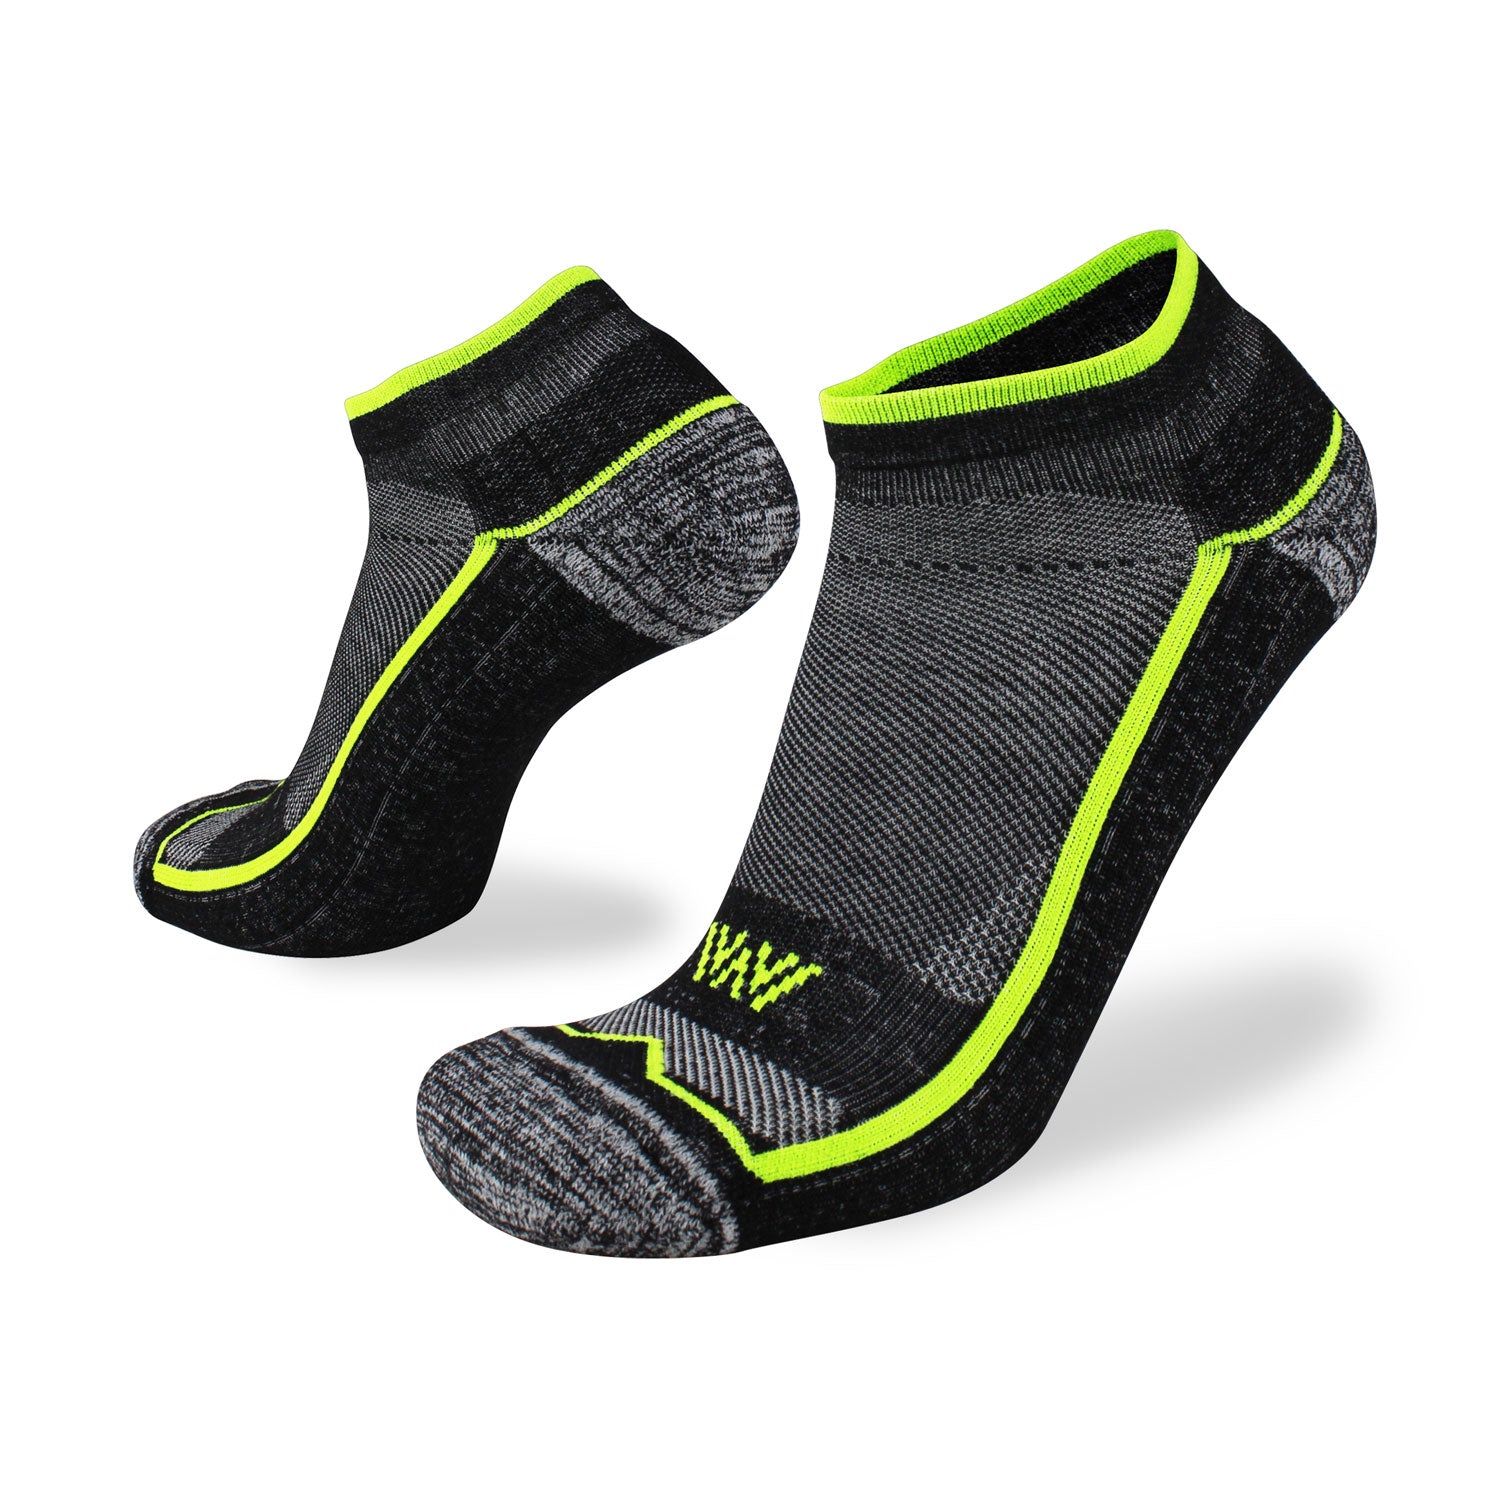 Wilderness Wear Merino 10k Trail Socks (Men's) - Black Lime - Find Your Feet Australia Hobart Launceston Tasmania